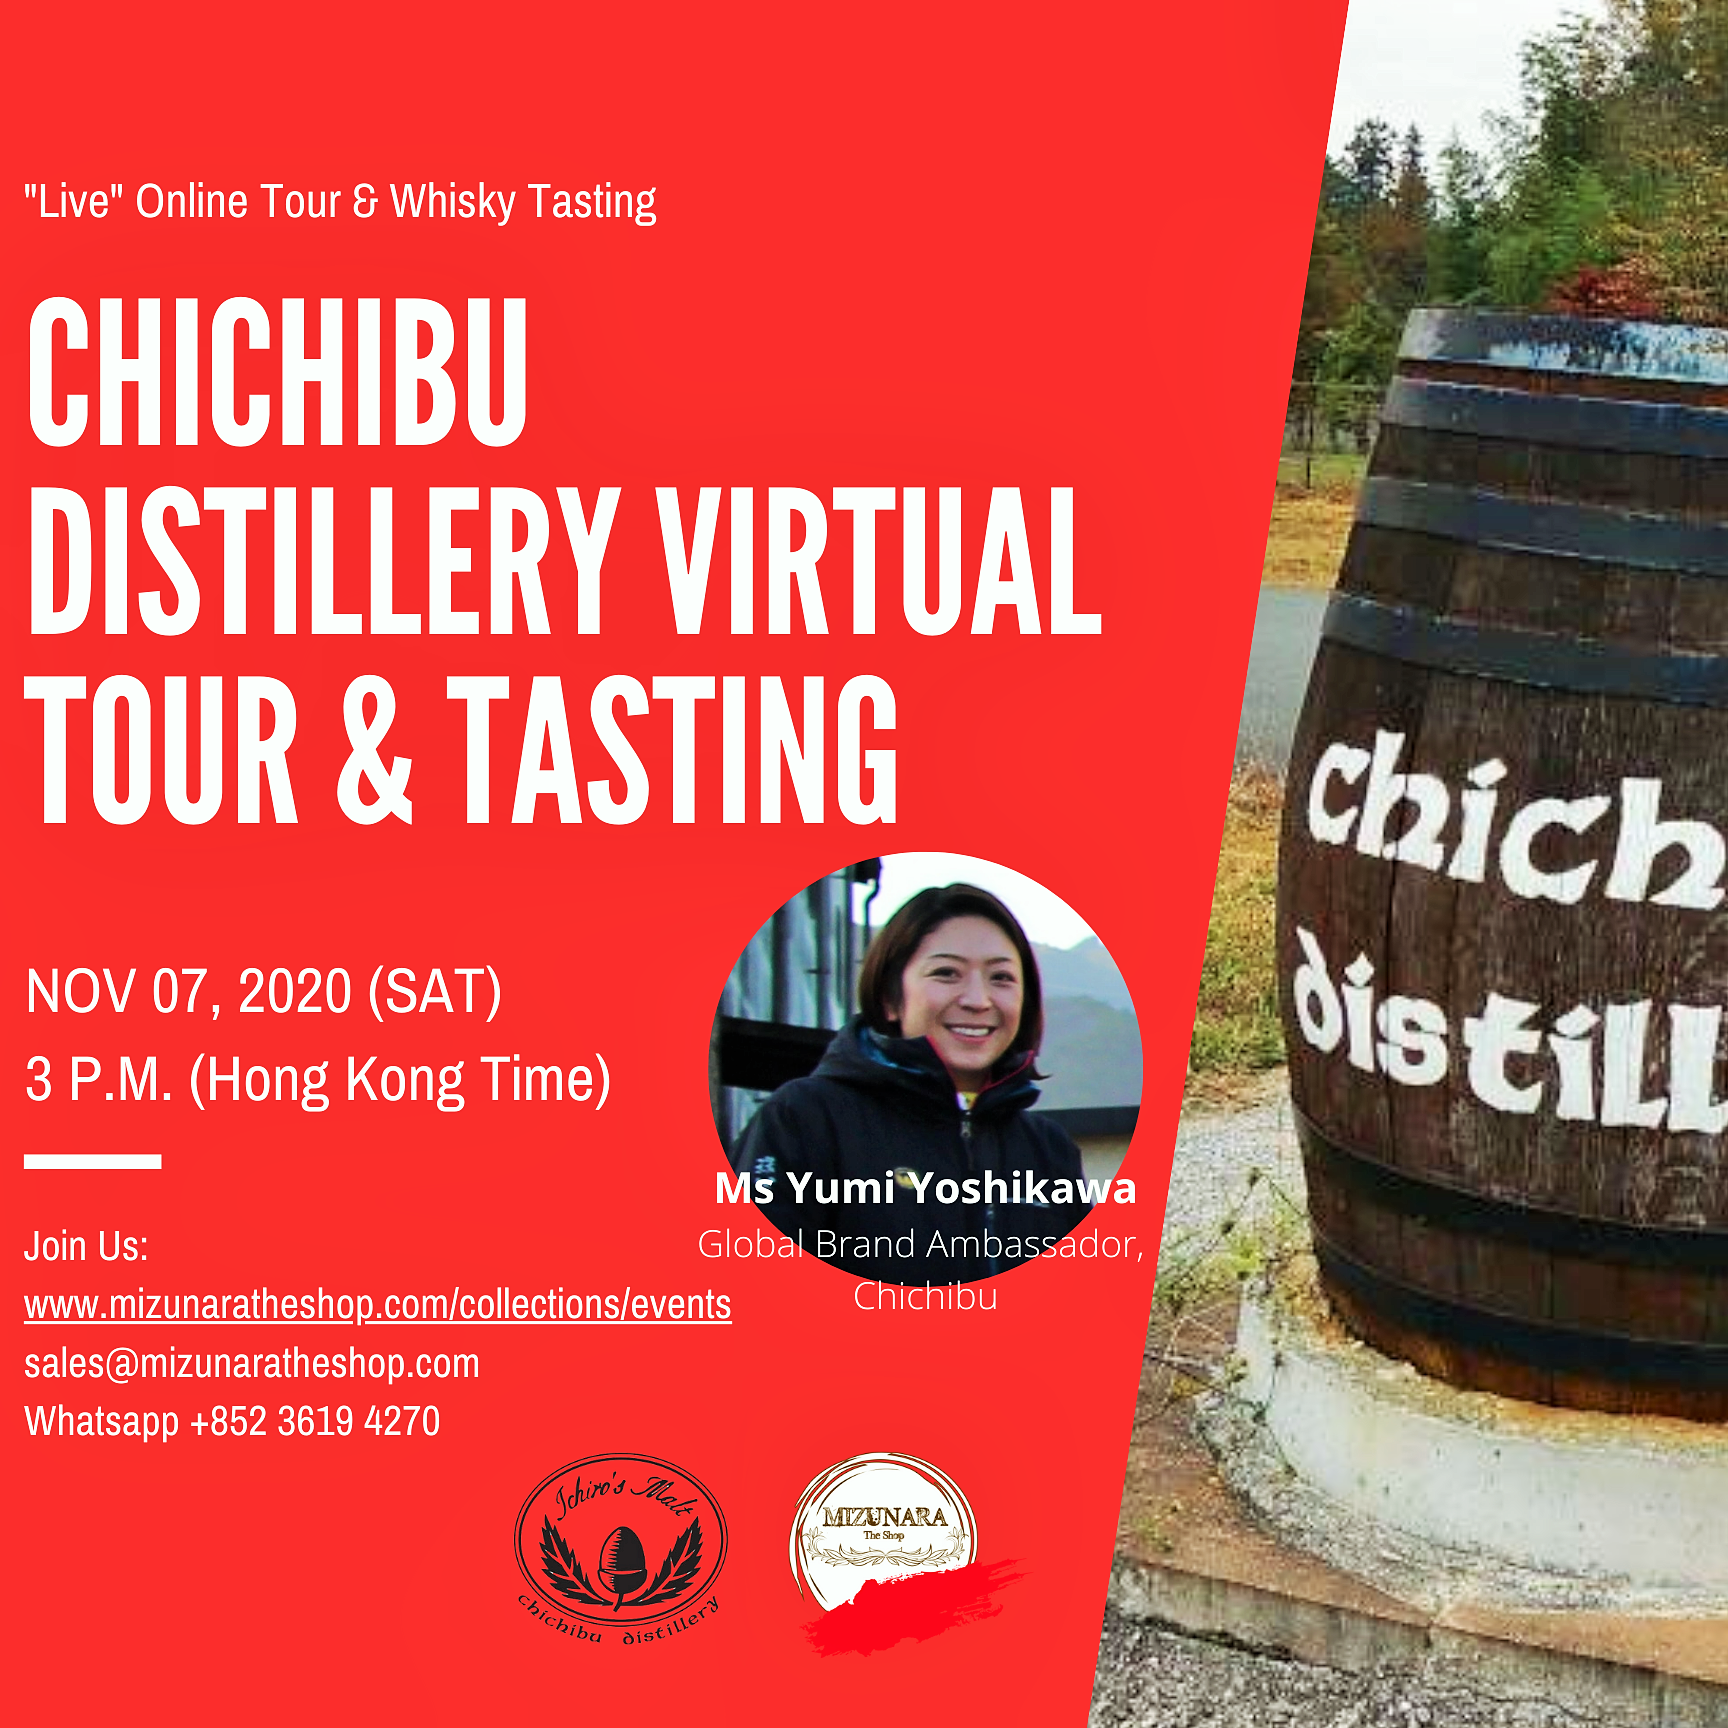 a virtual whisky distillery tour and tasting with Ichiro Malt of Chichibu and Mizunara Hong Kong